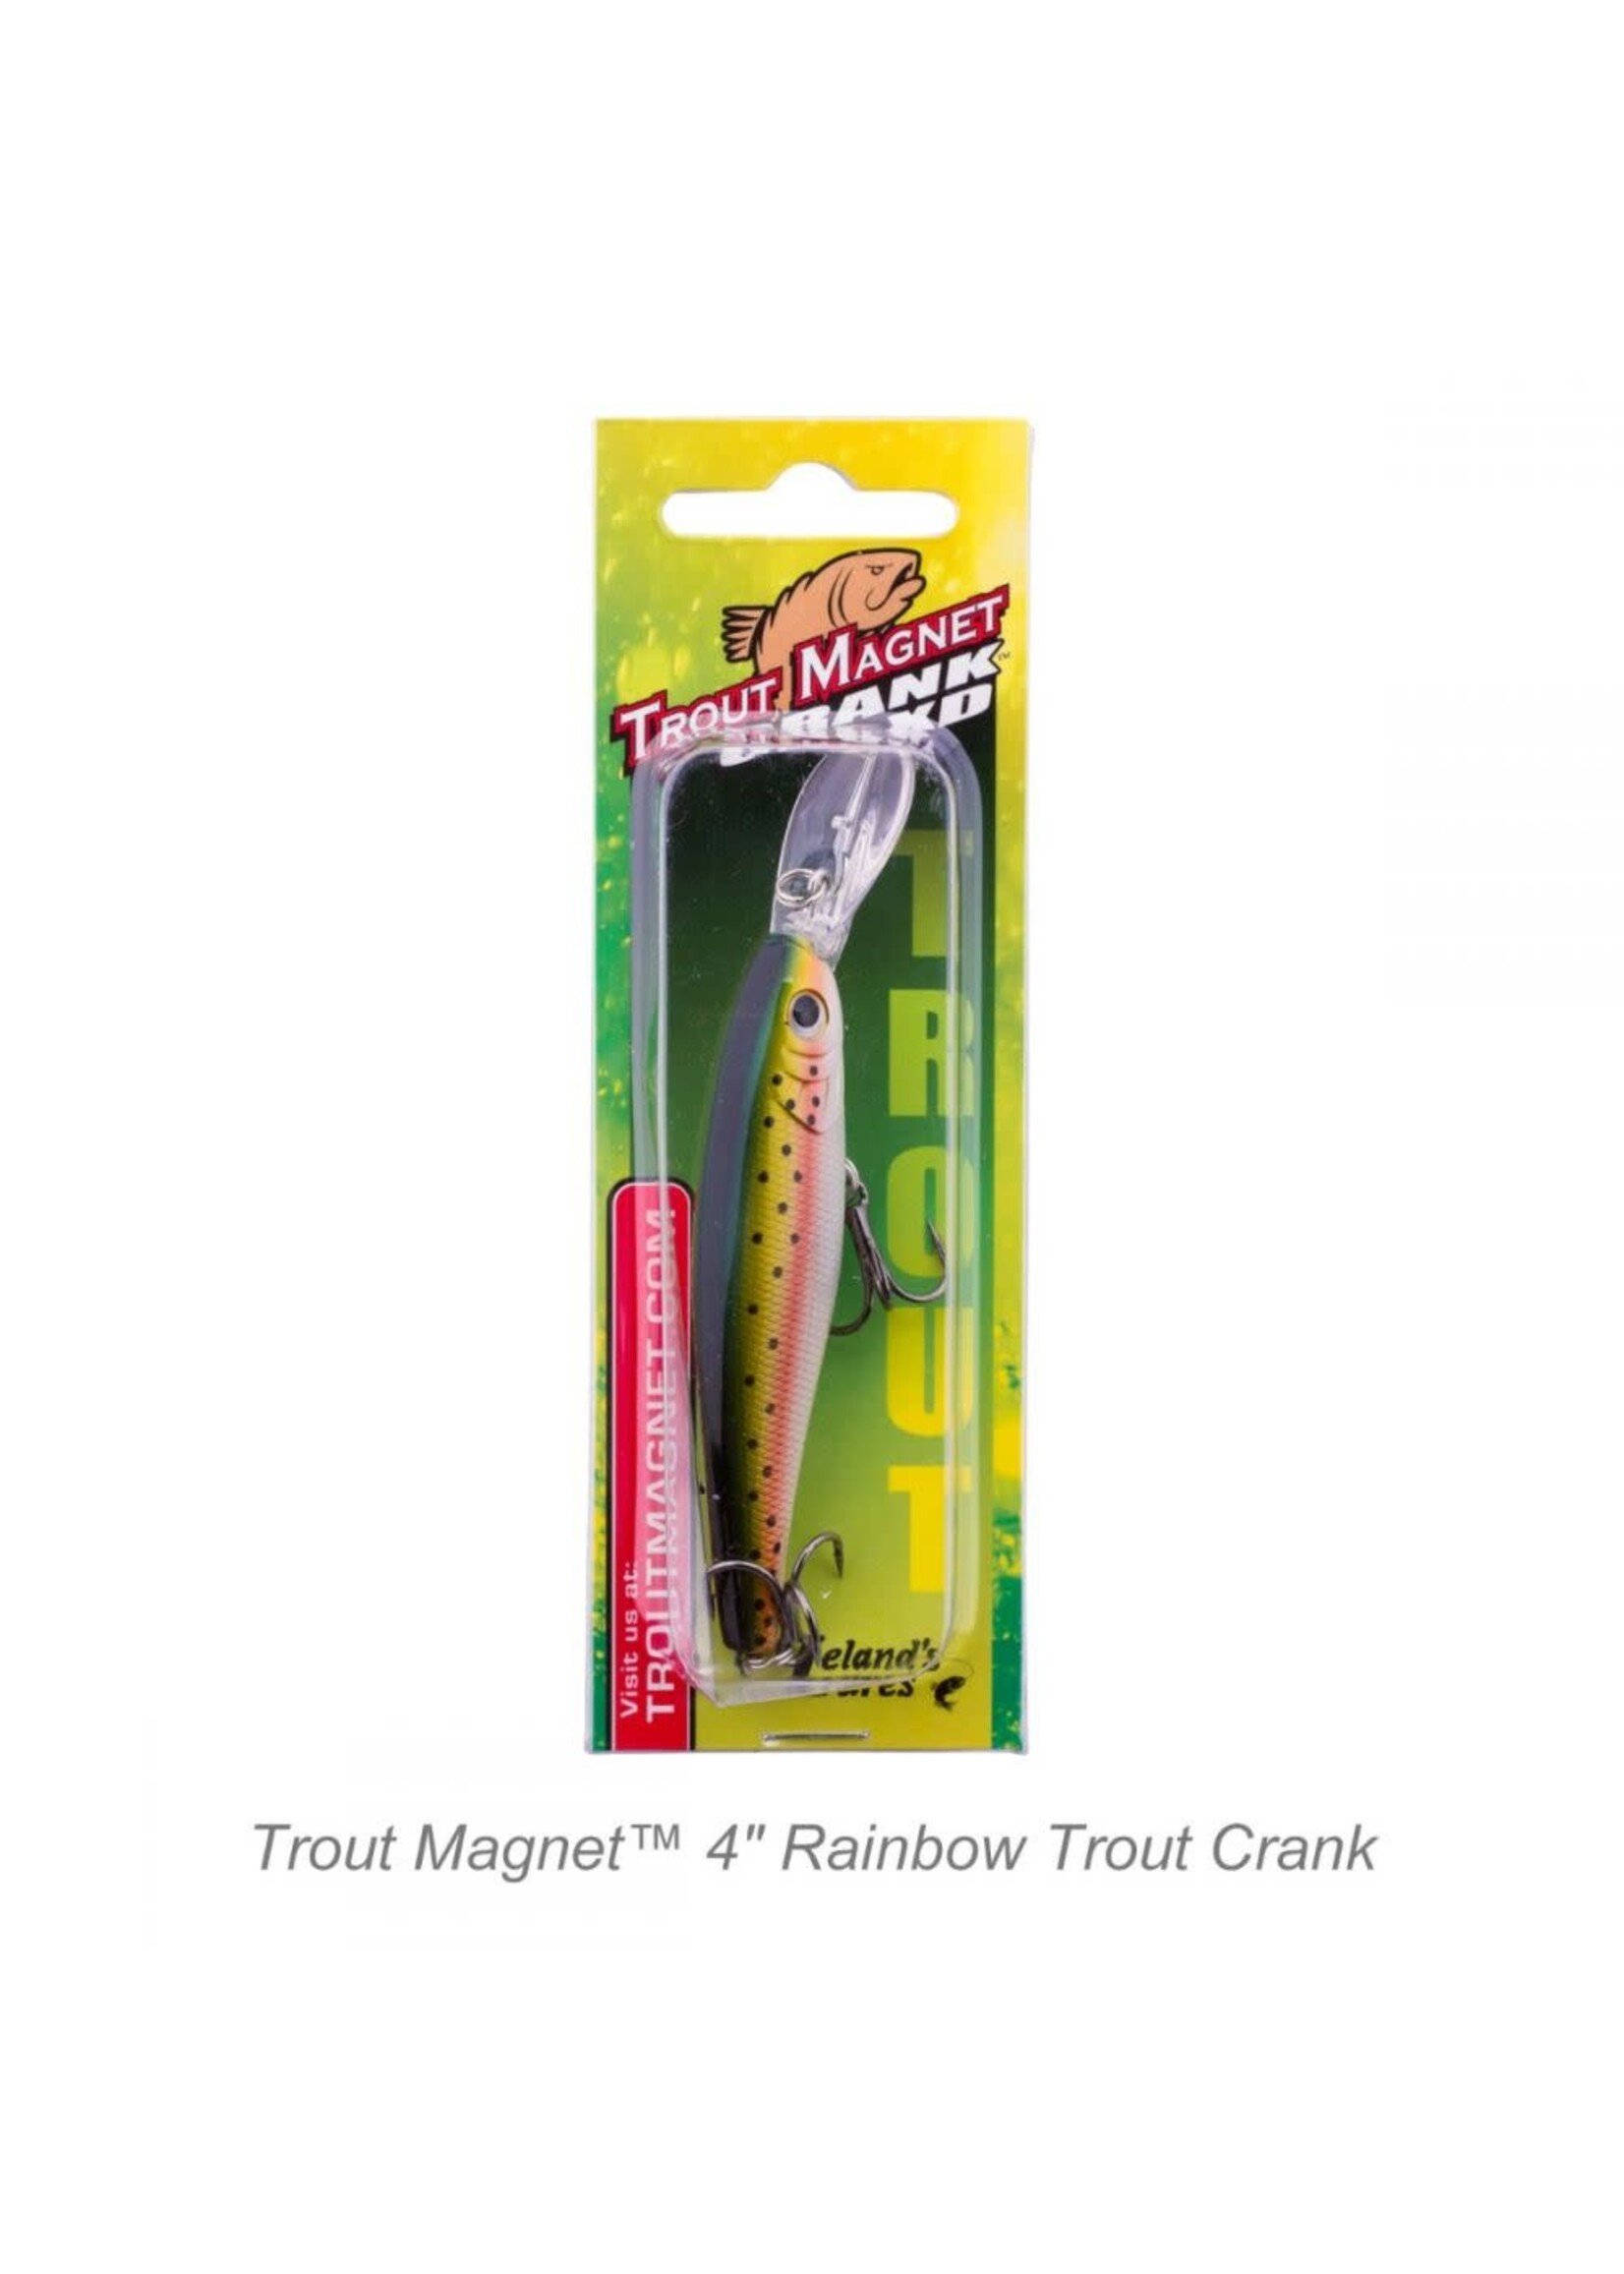 Trout Magnet 3.5 inch Crank Bait, Brown